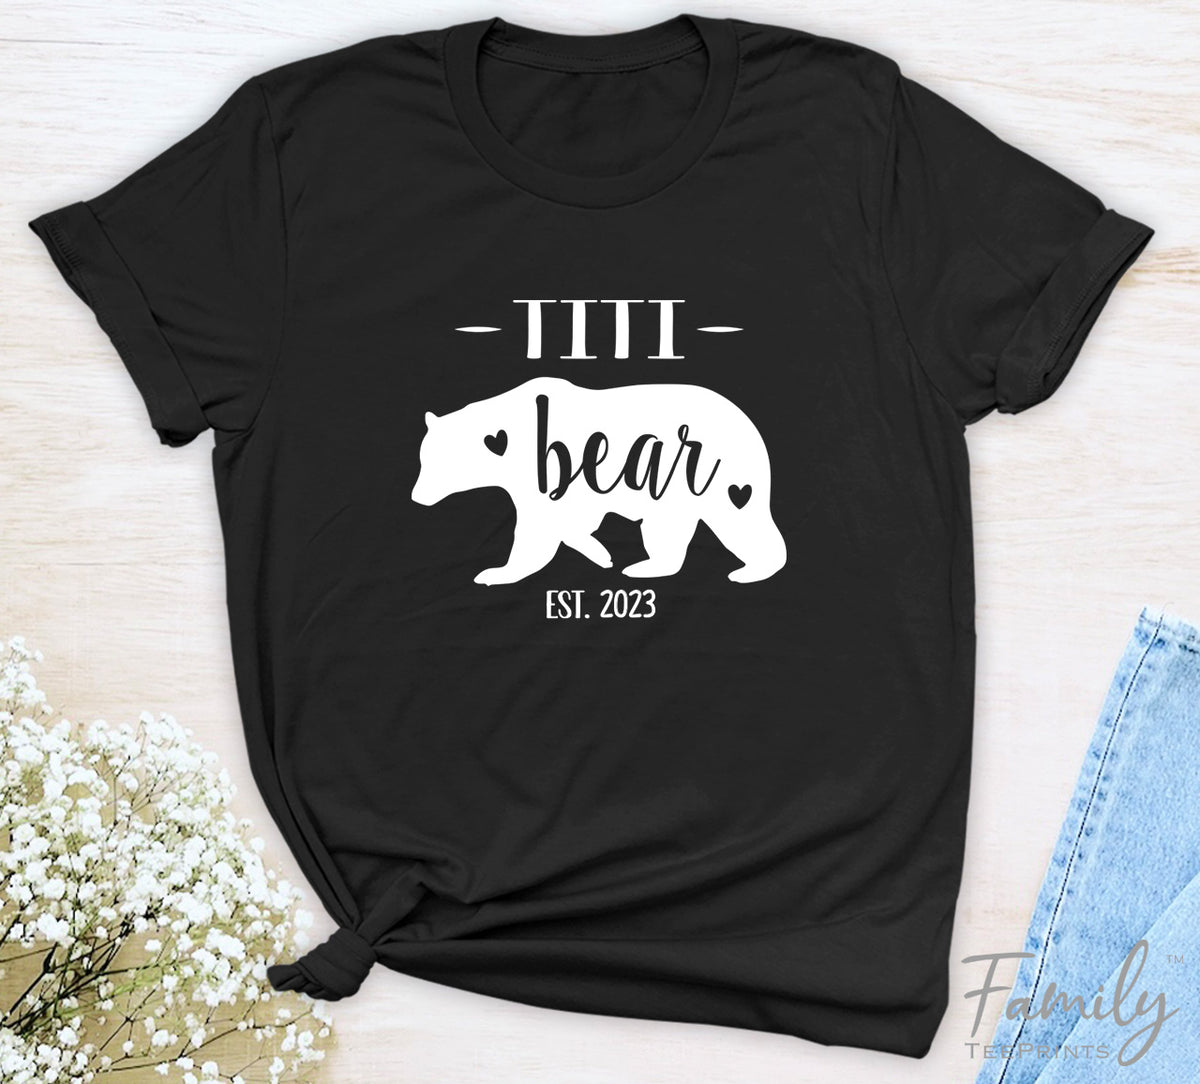 Titi Bear Est. 2023 - Unisex T-shirt - Titi Shirt - Gift For New Titi - familyteeprints